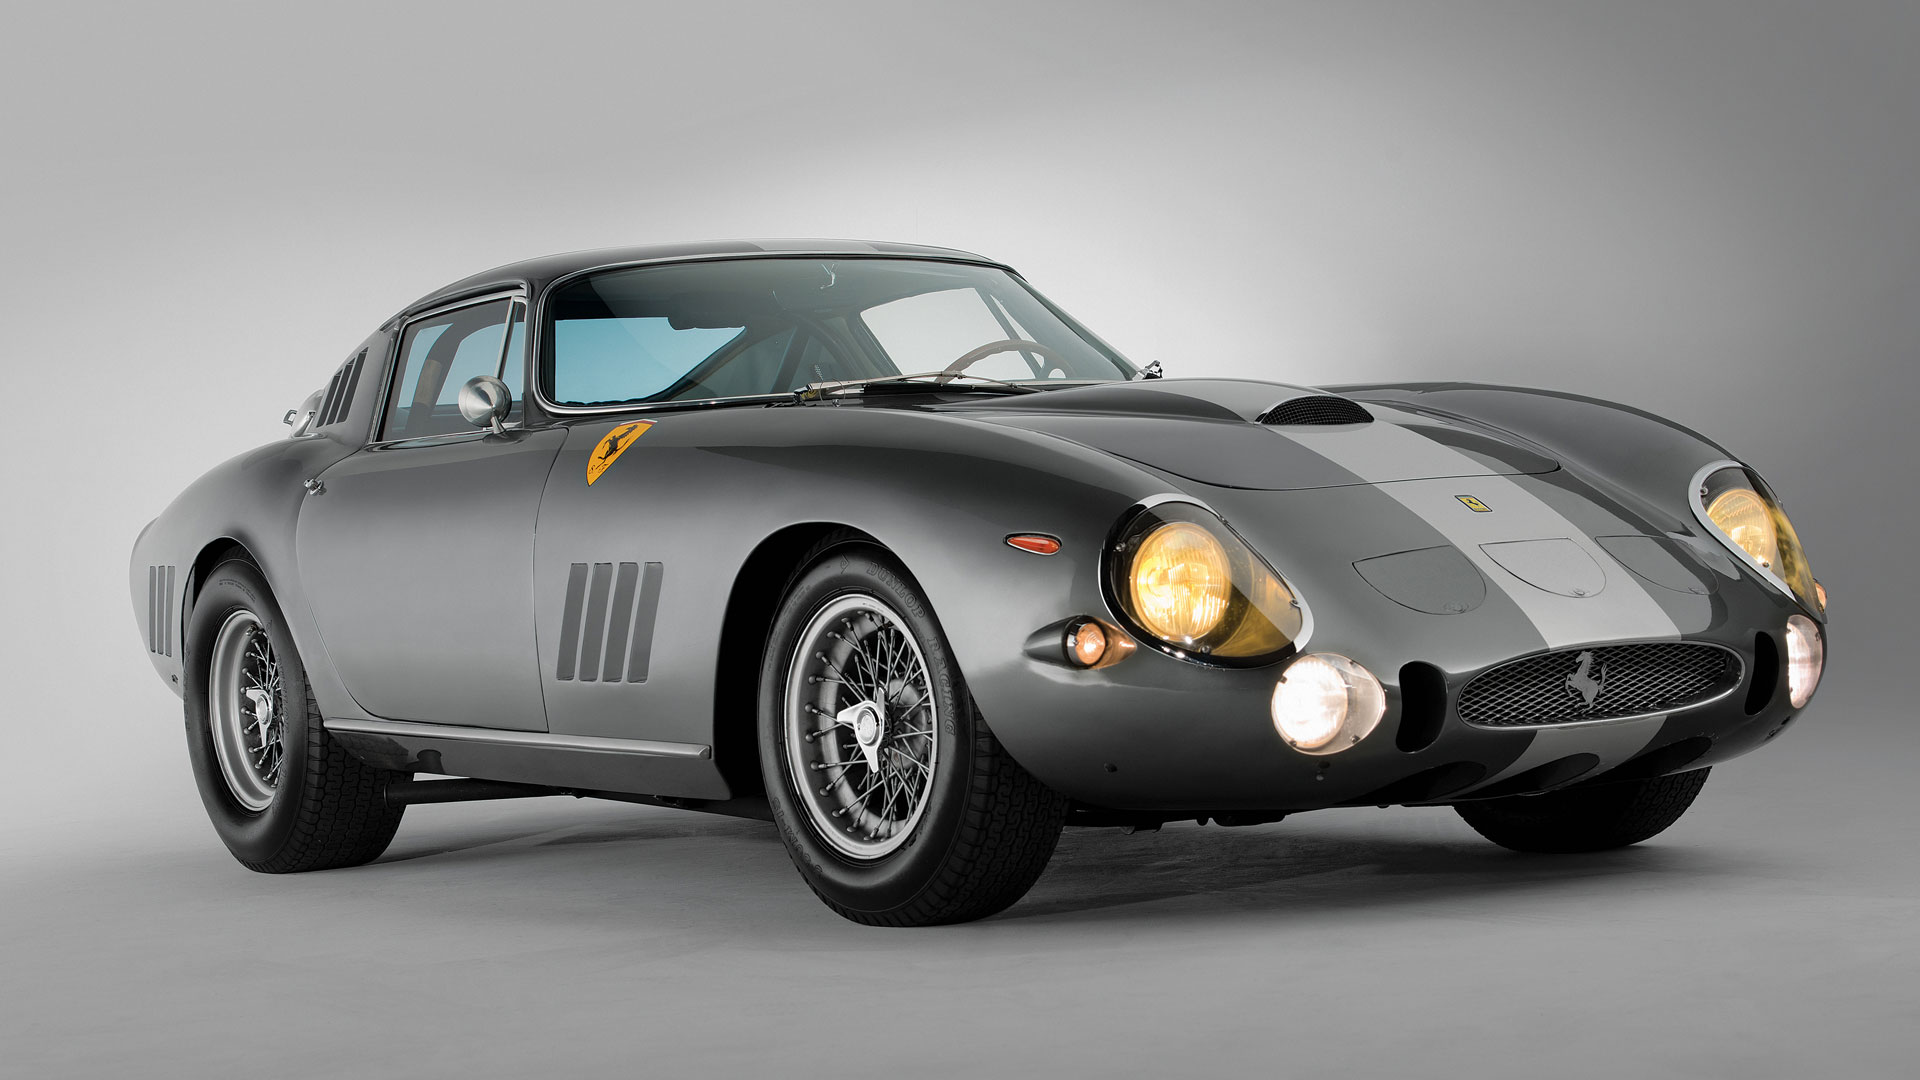 10. 1964 Ferrari 275 GTB-C Speciale – $26,400,000